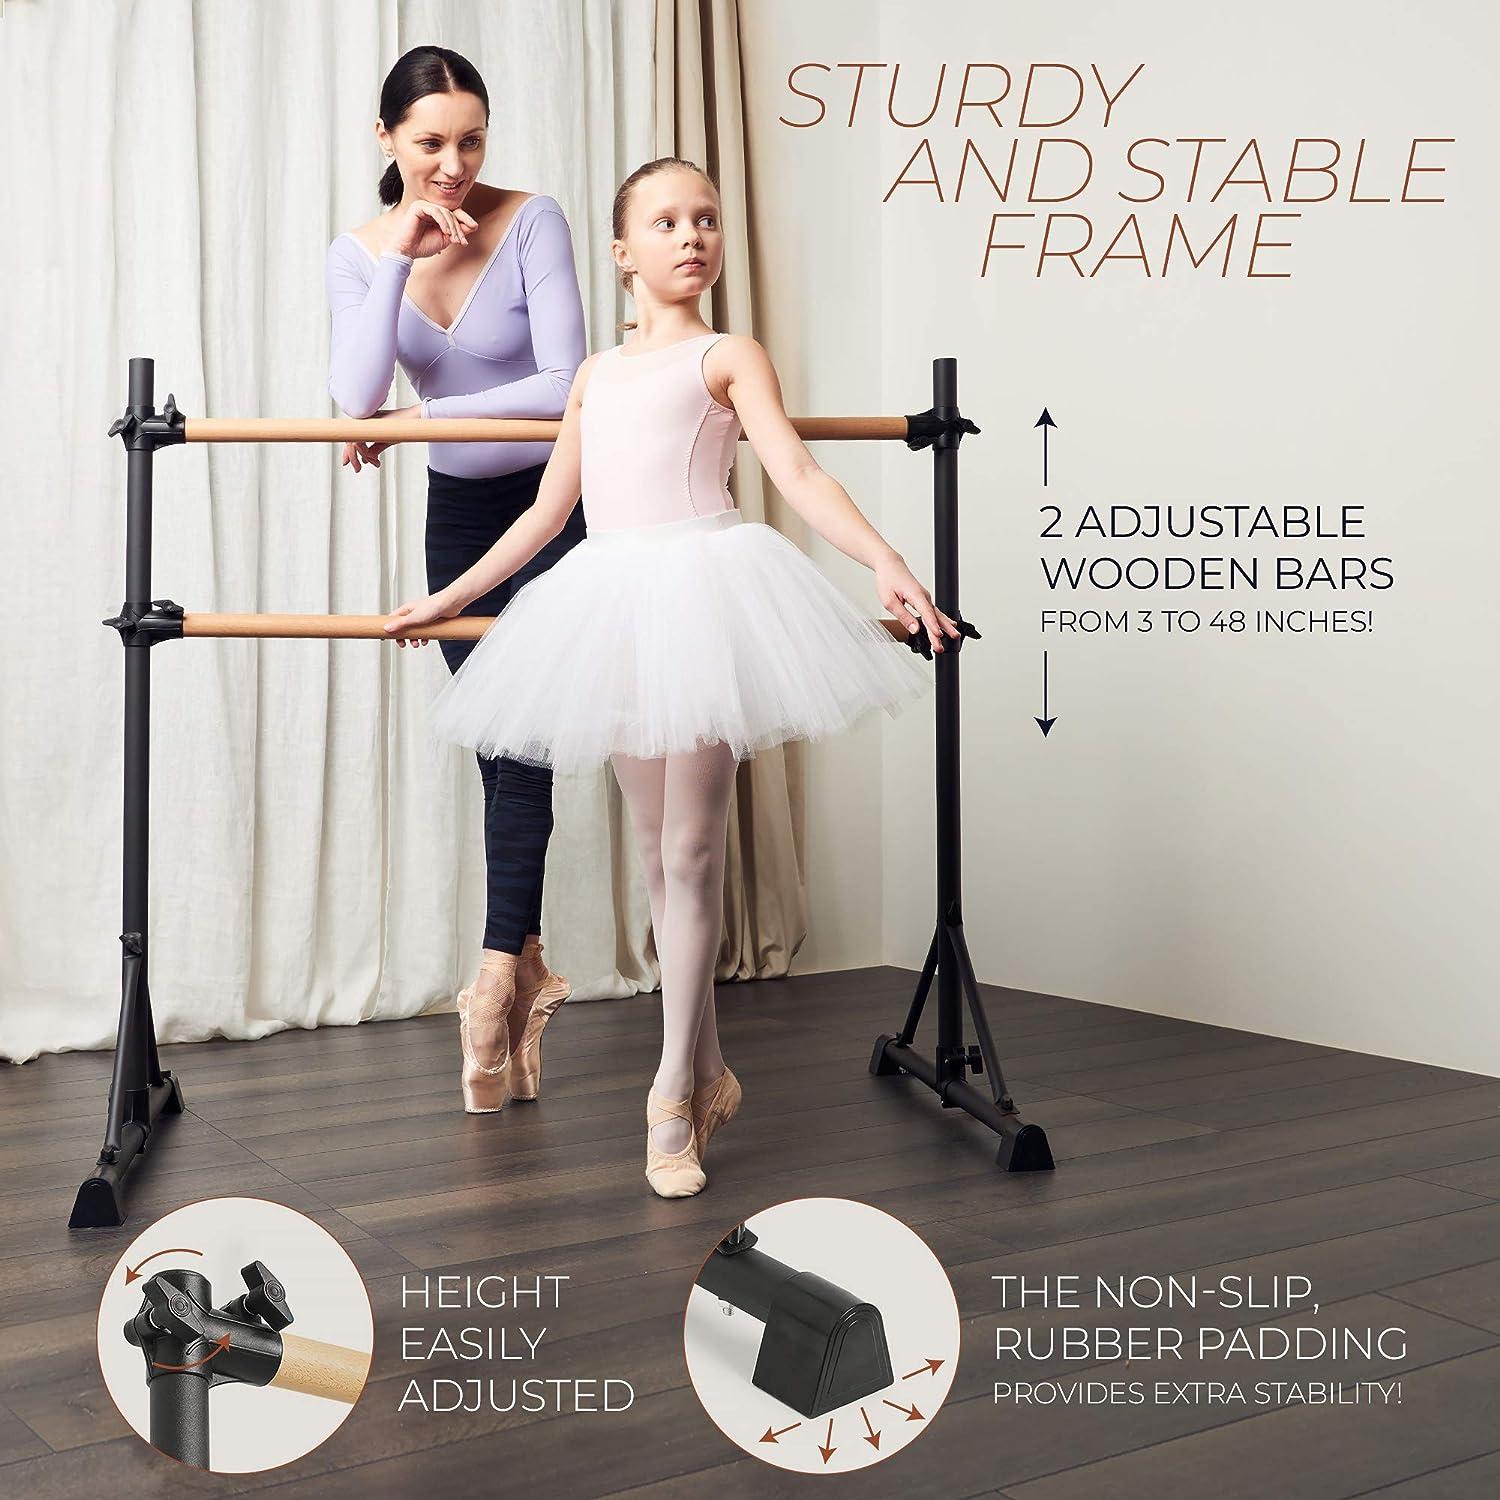 Portable Ballet Barres for Home|Dance Barre Workout|4ft Fitness Barre